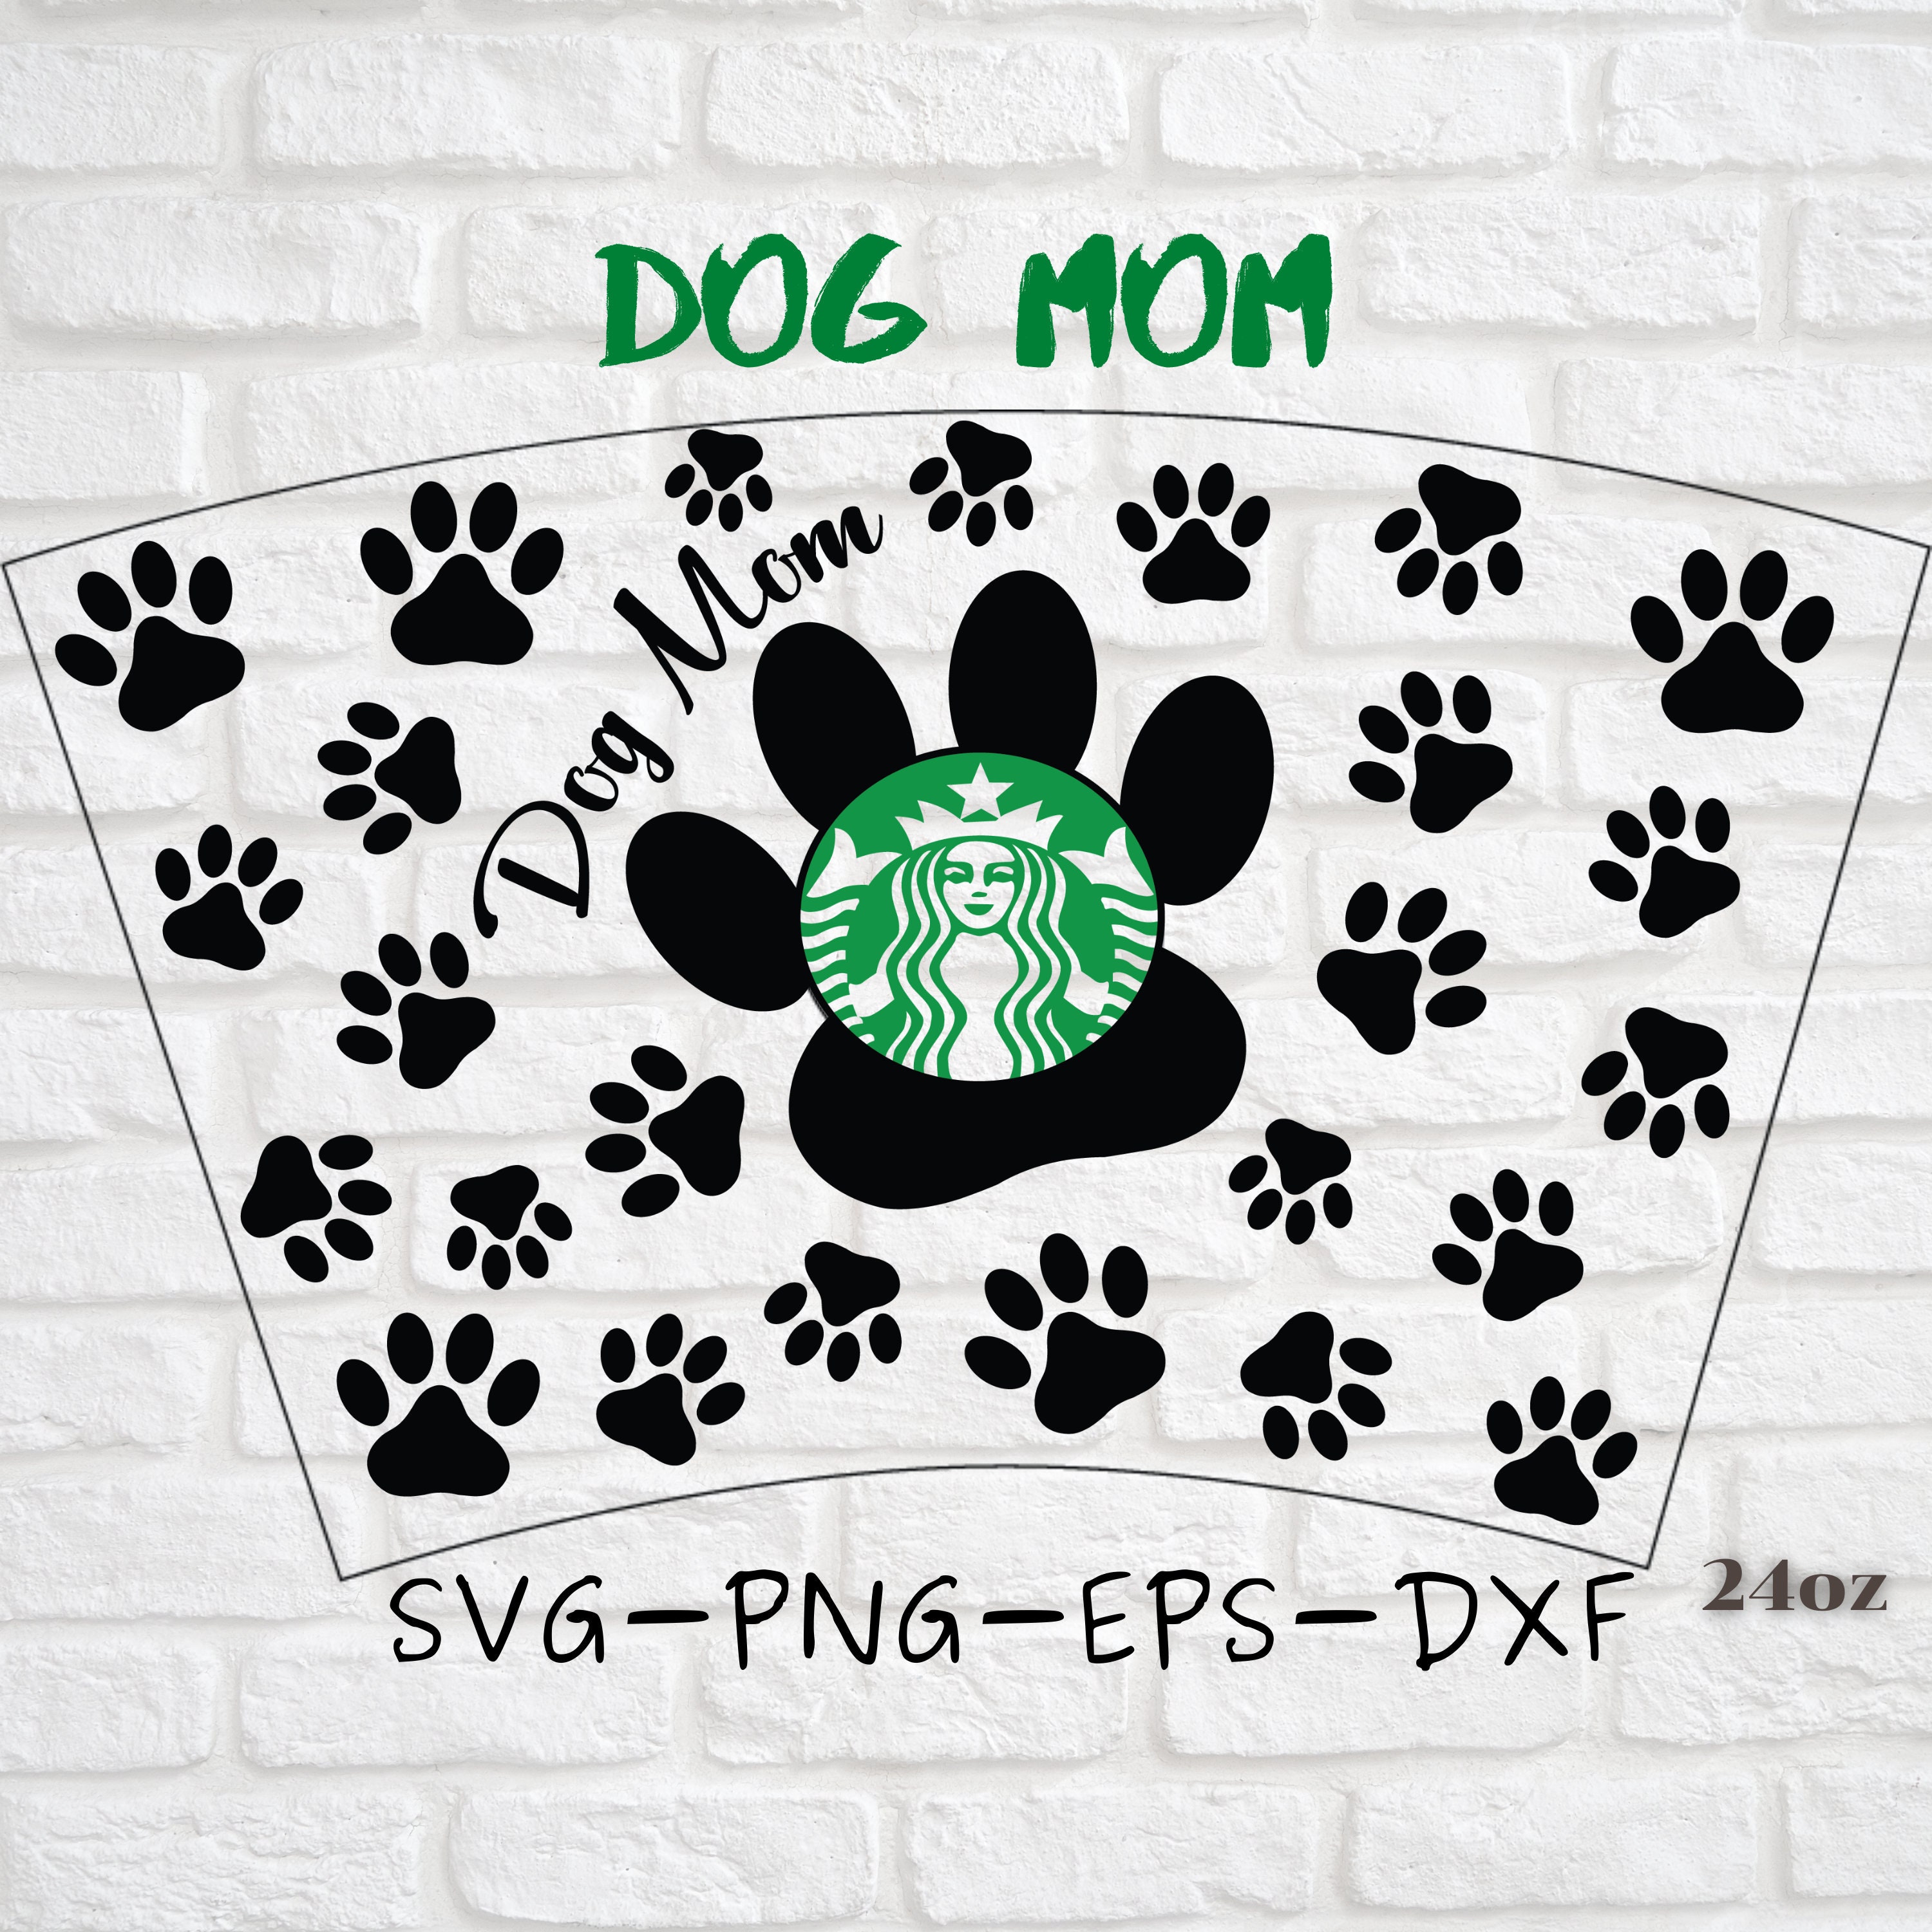 Dog mom starbucks full wrap svg png eps dxf digital file | Etsy